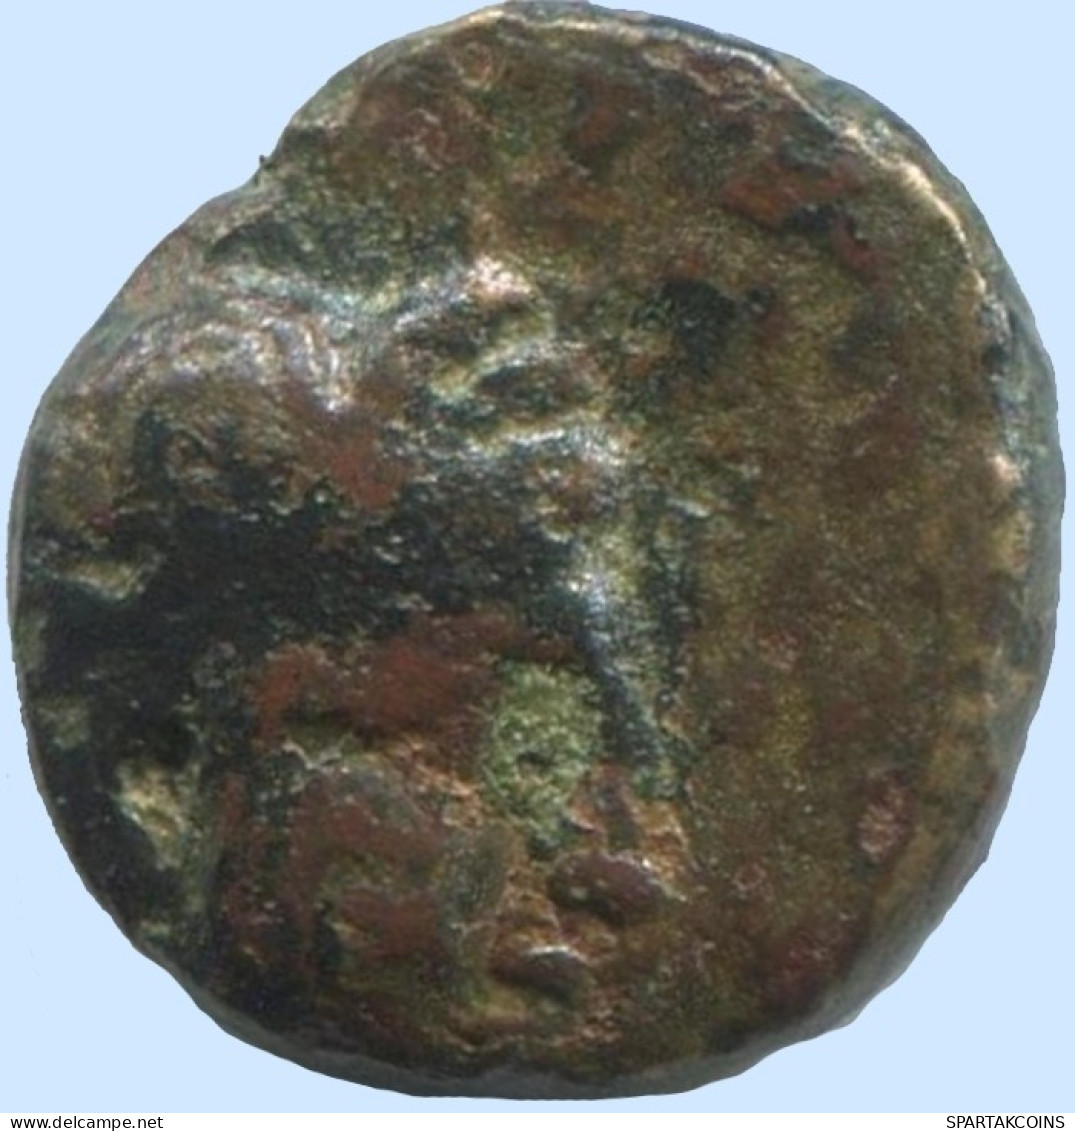 PEGASUS Antike Authentische Original GRIECHISCHE Münze 0.8g/10mm #ANT1698.10.D.A - Griekenland